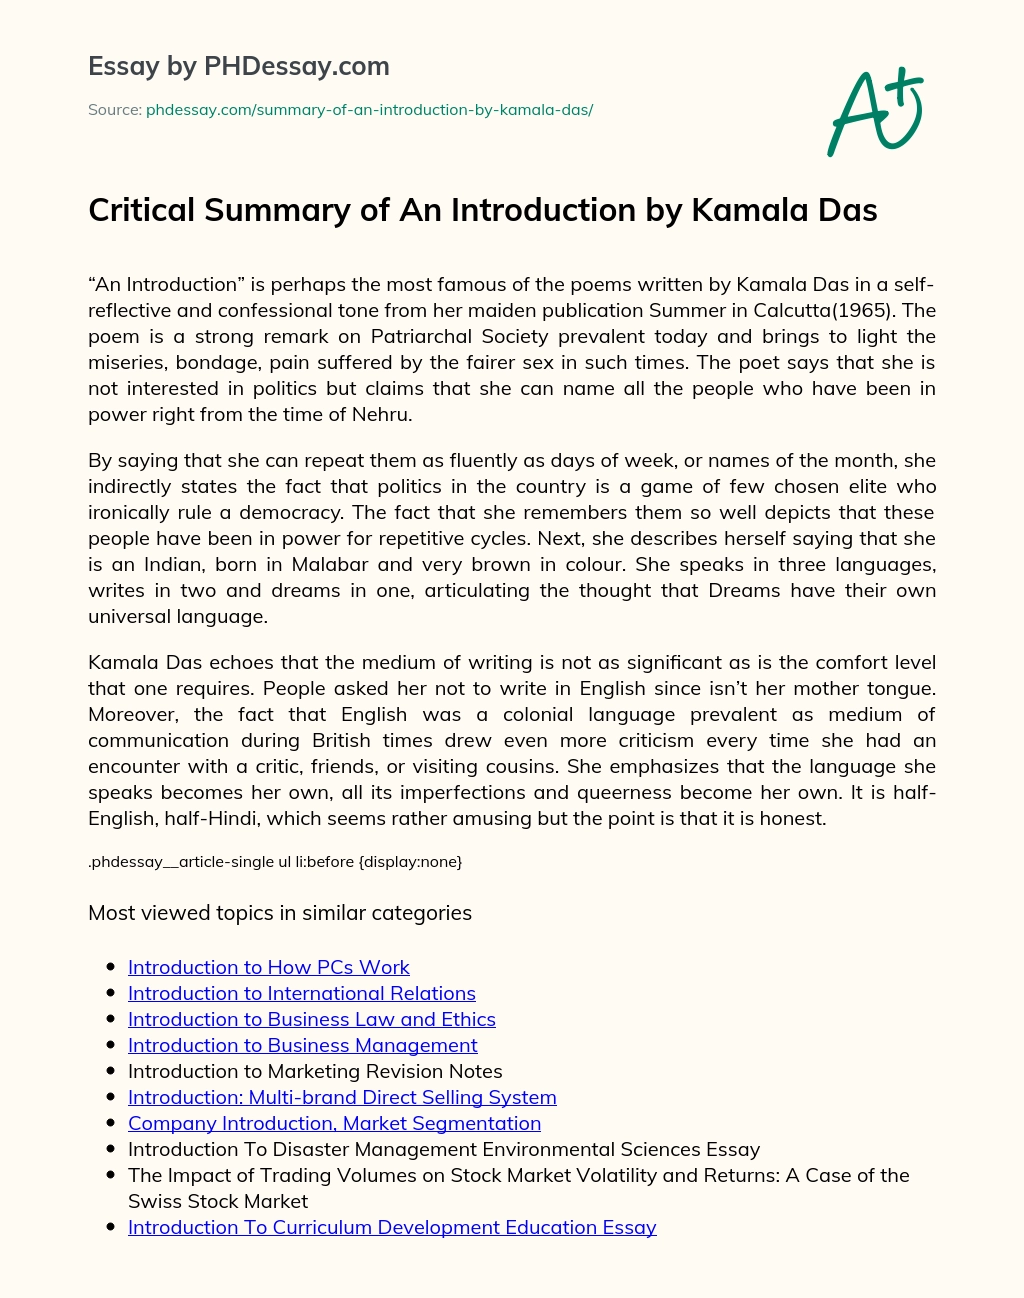 Critical Summary of An Introduction by Kamala Das essay